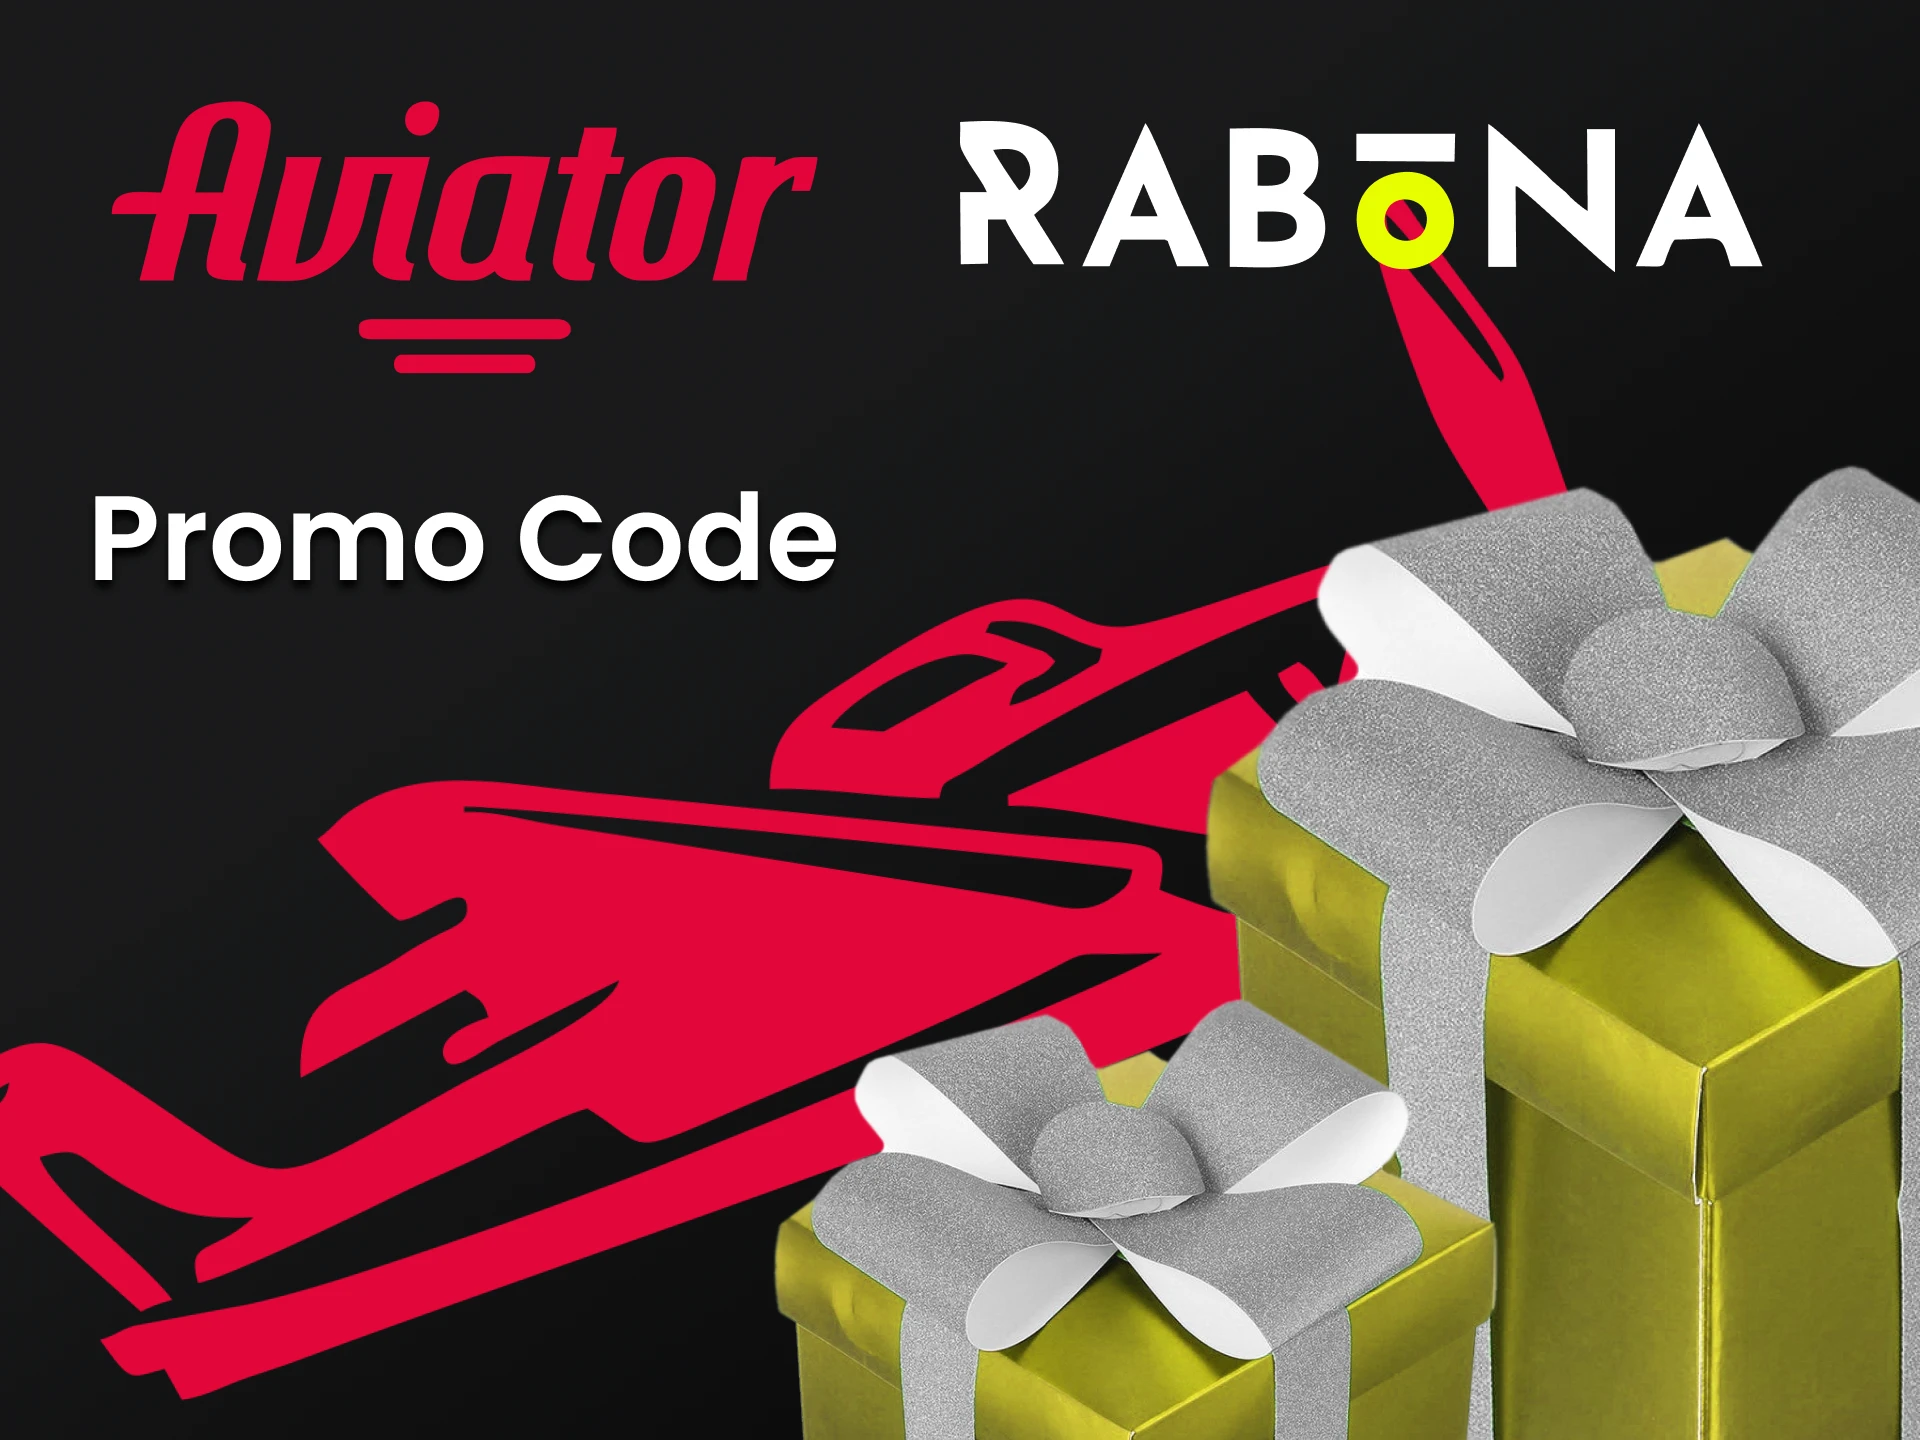 Get a bonus for the Aviator from Rabona.